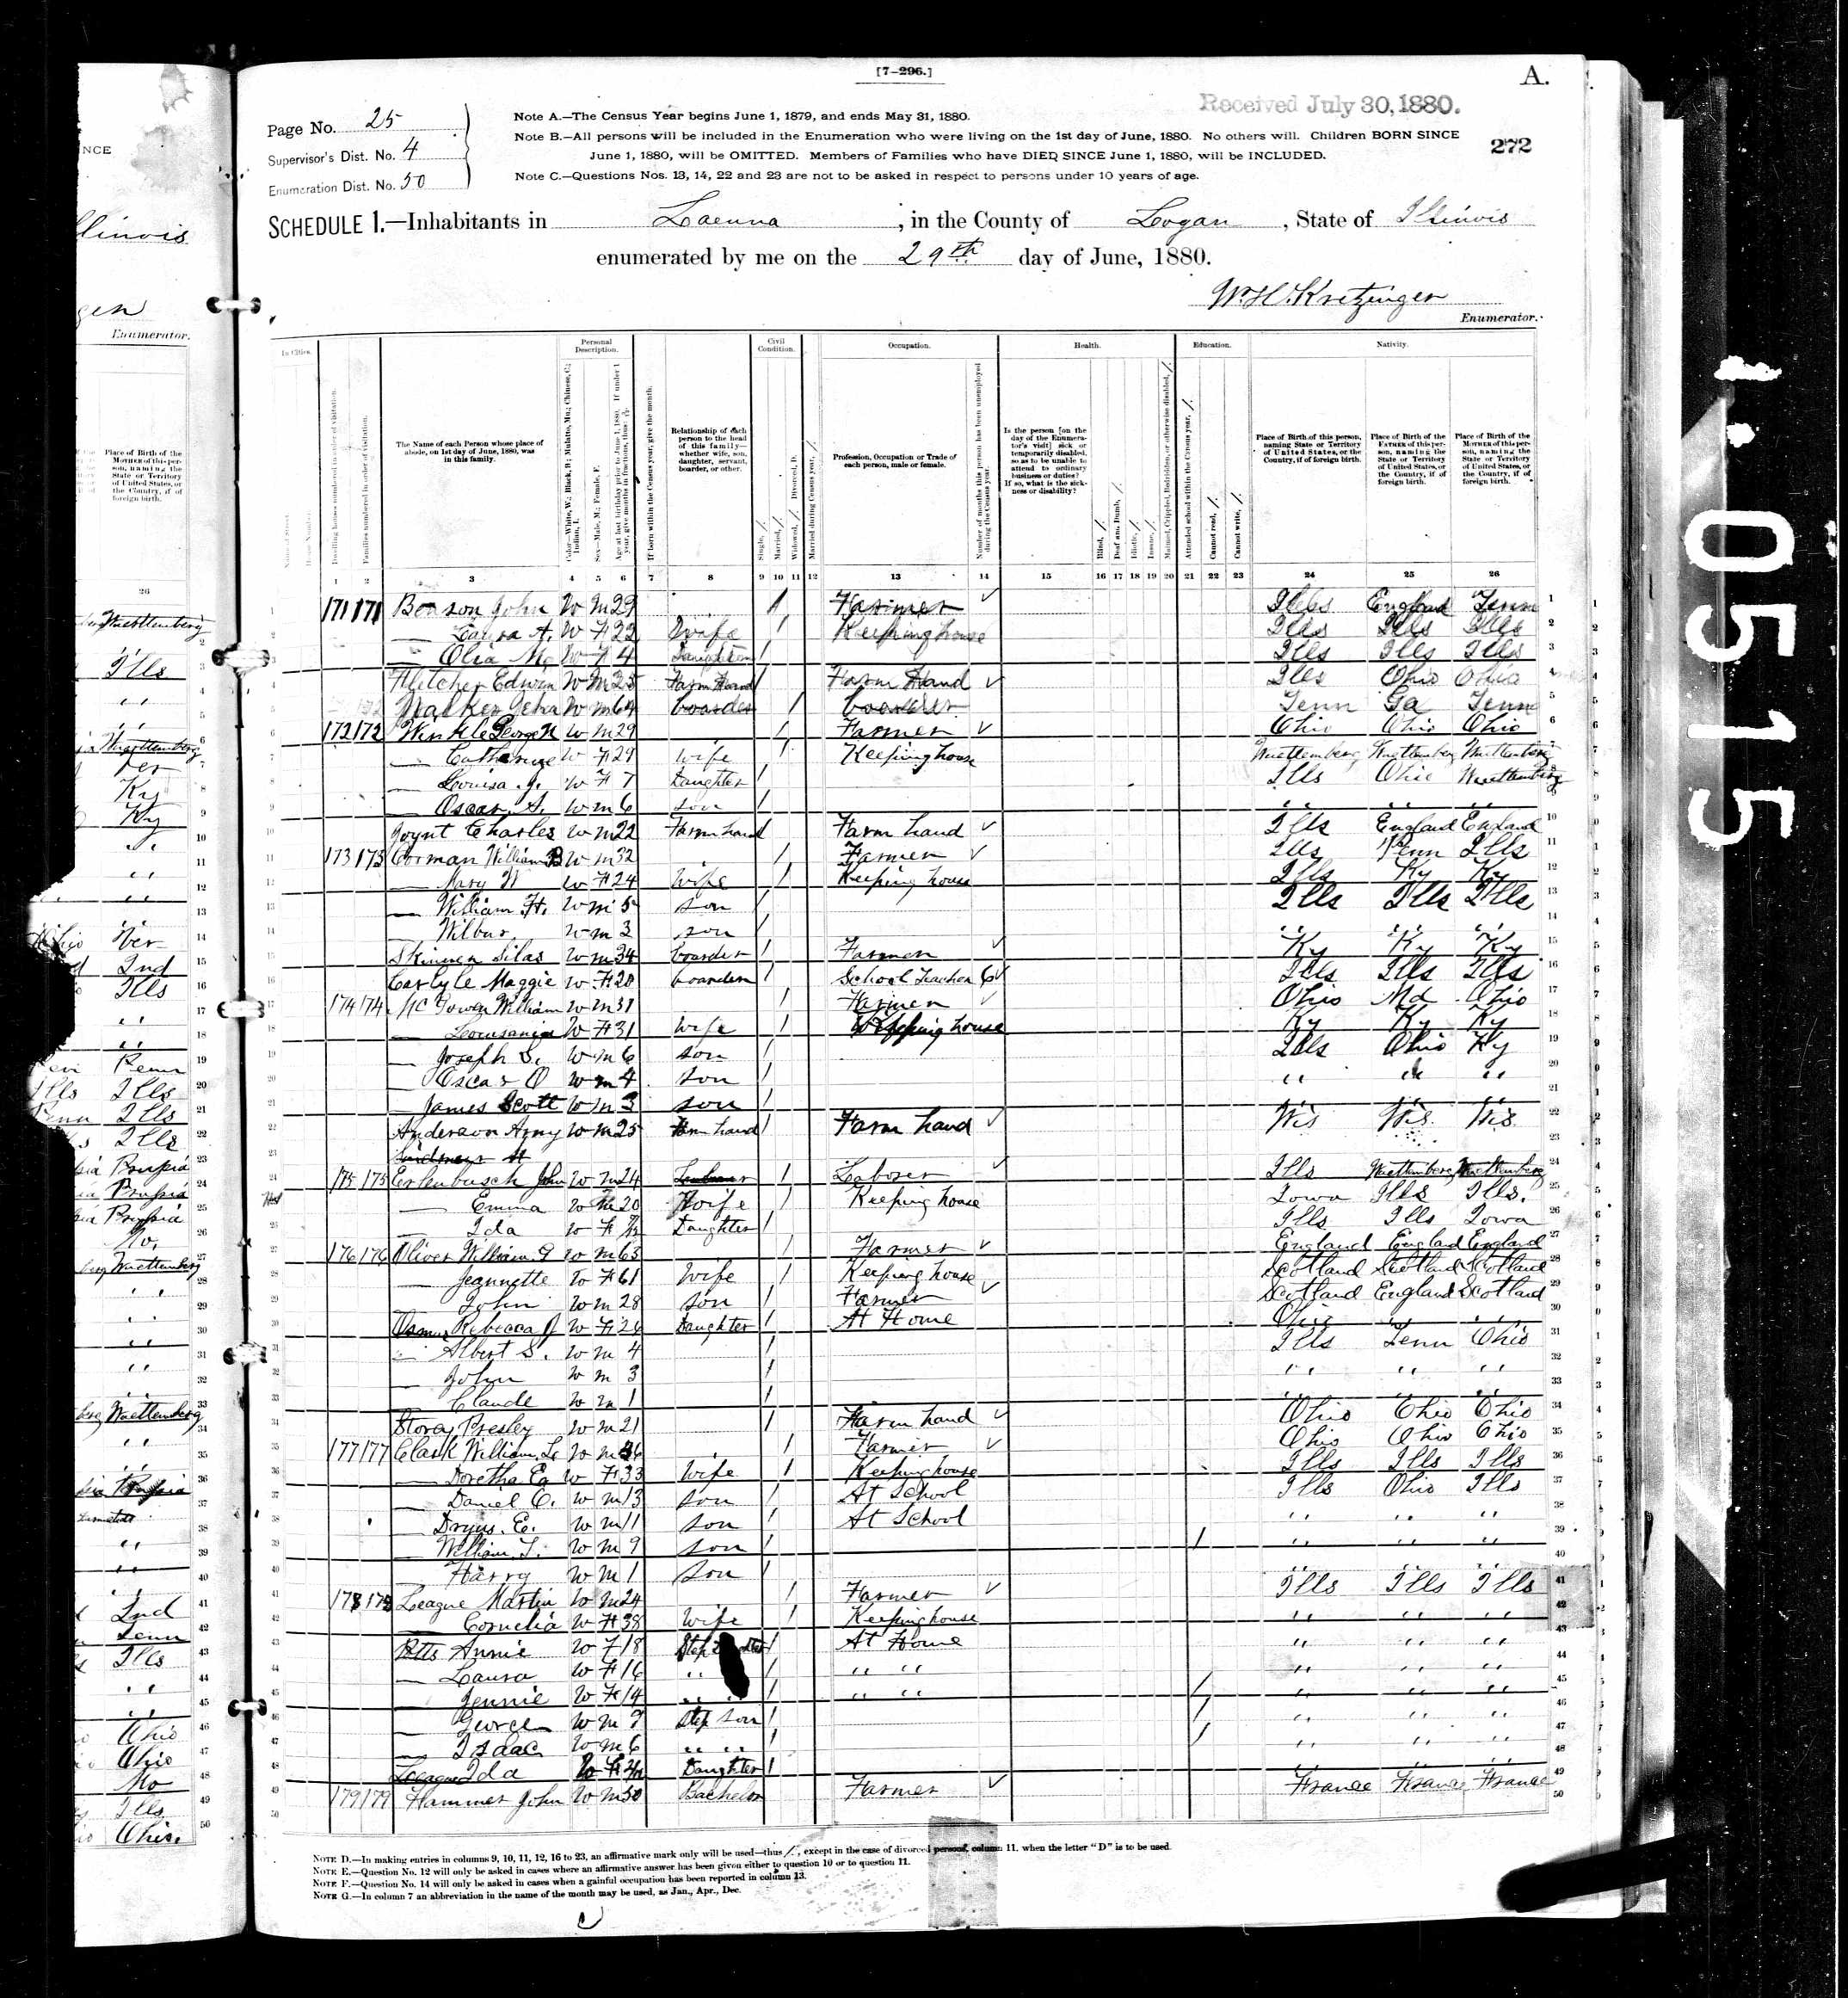 Jehu Walker, 1880 Logan County, Illinois, census